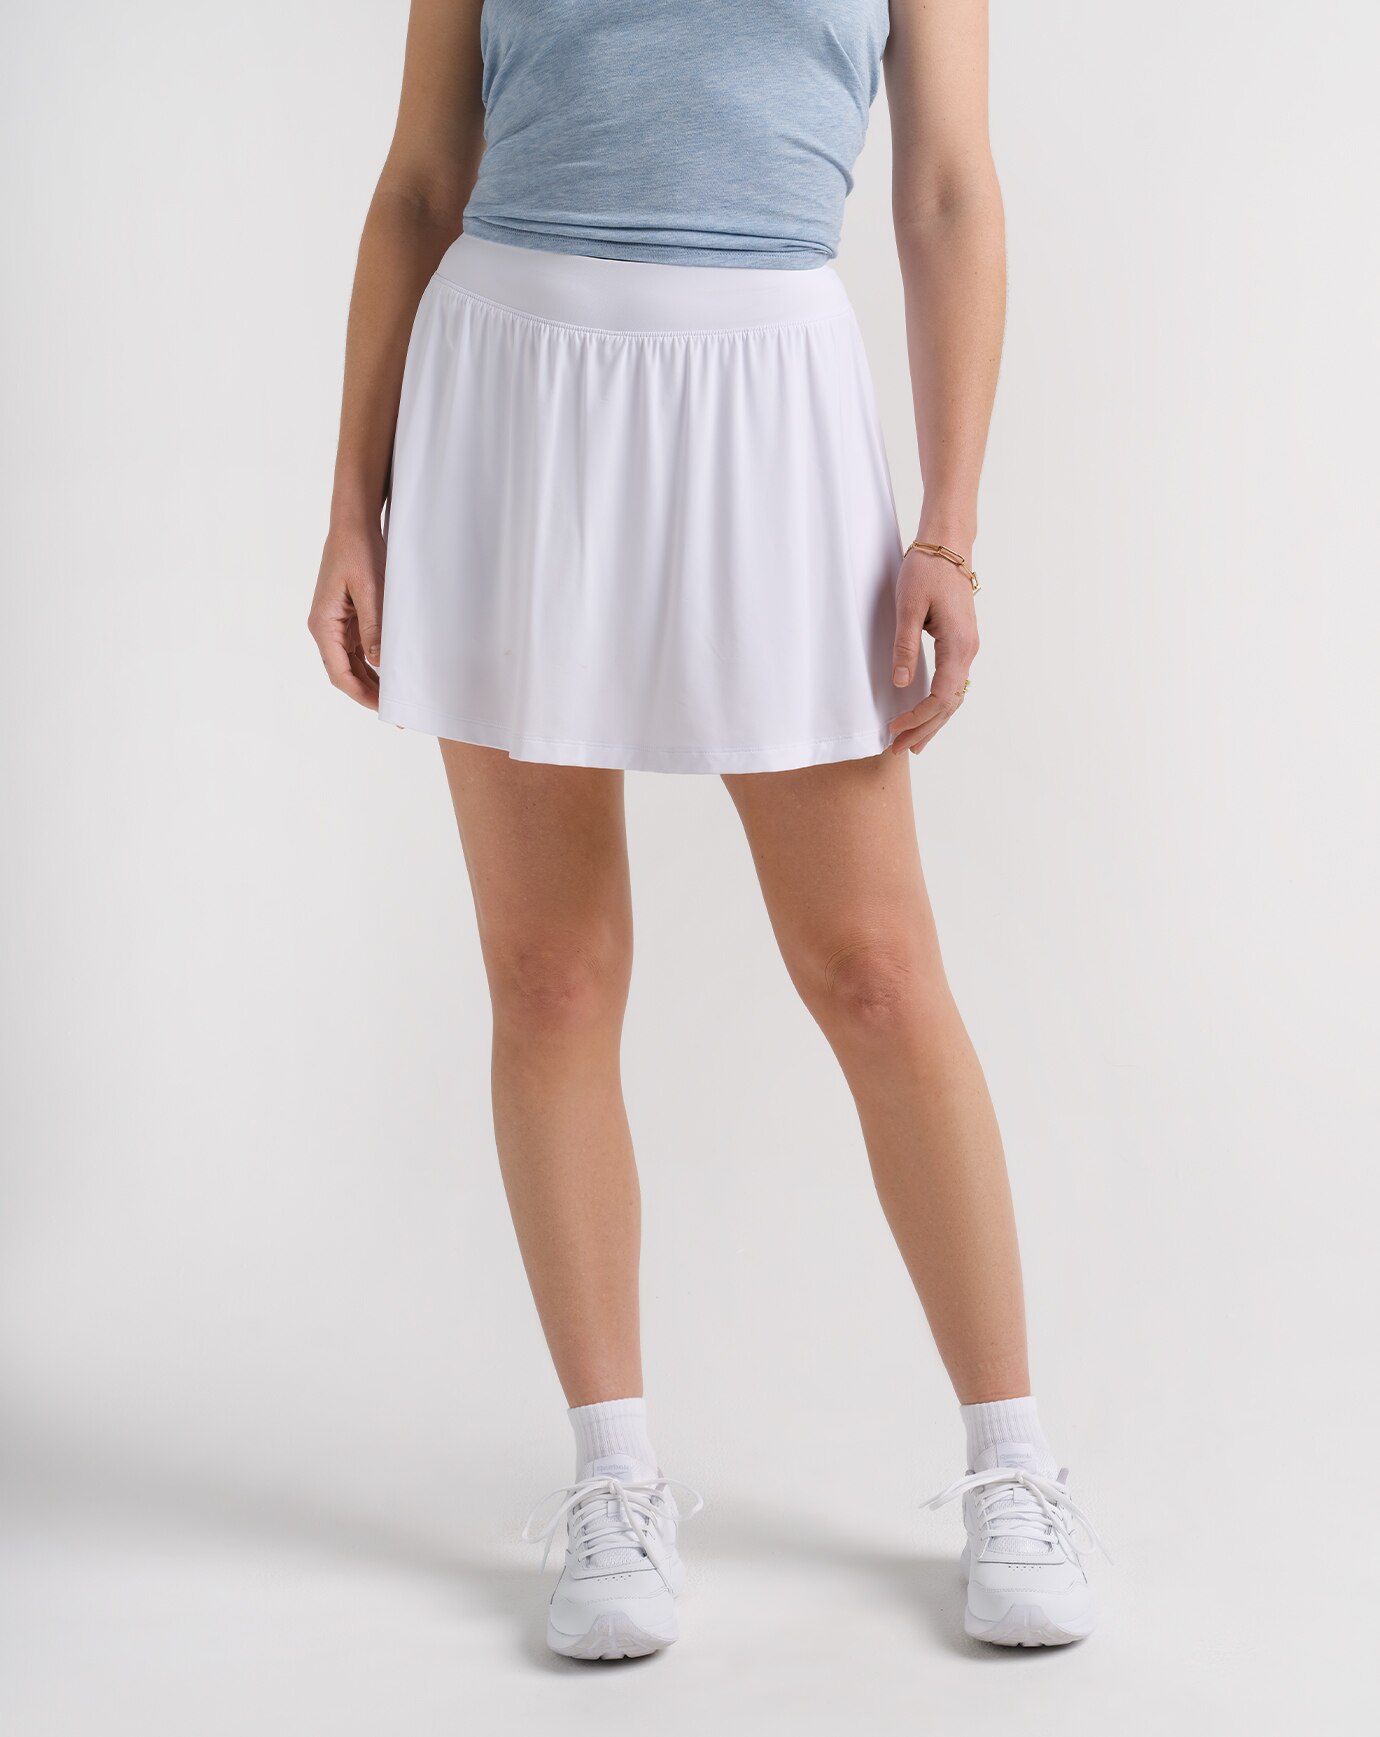 Cloud Hide Tennis Skirts Women Sports Golf Pleated Skirt Fitness